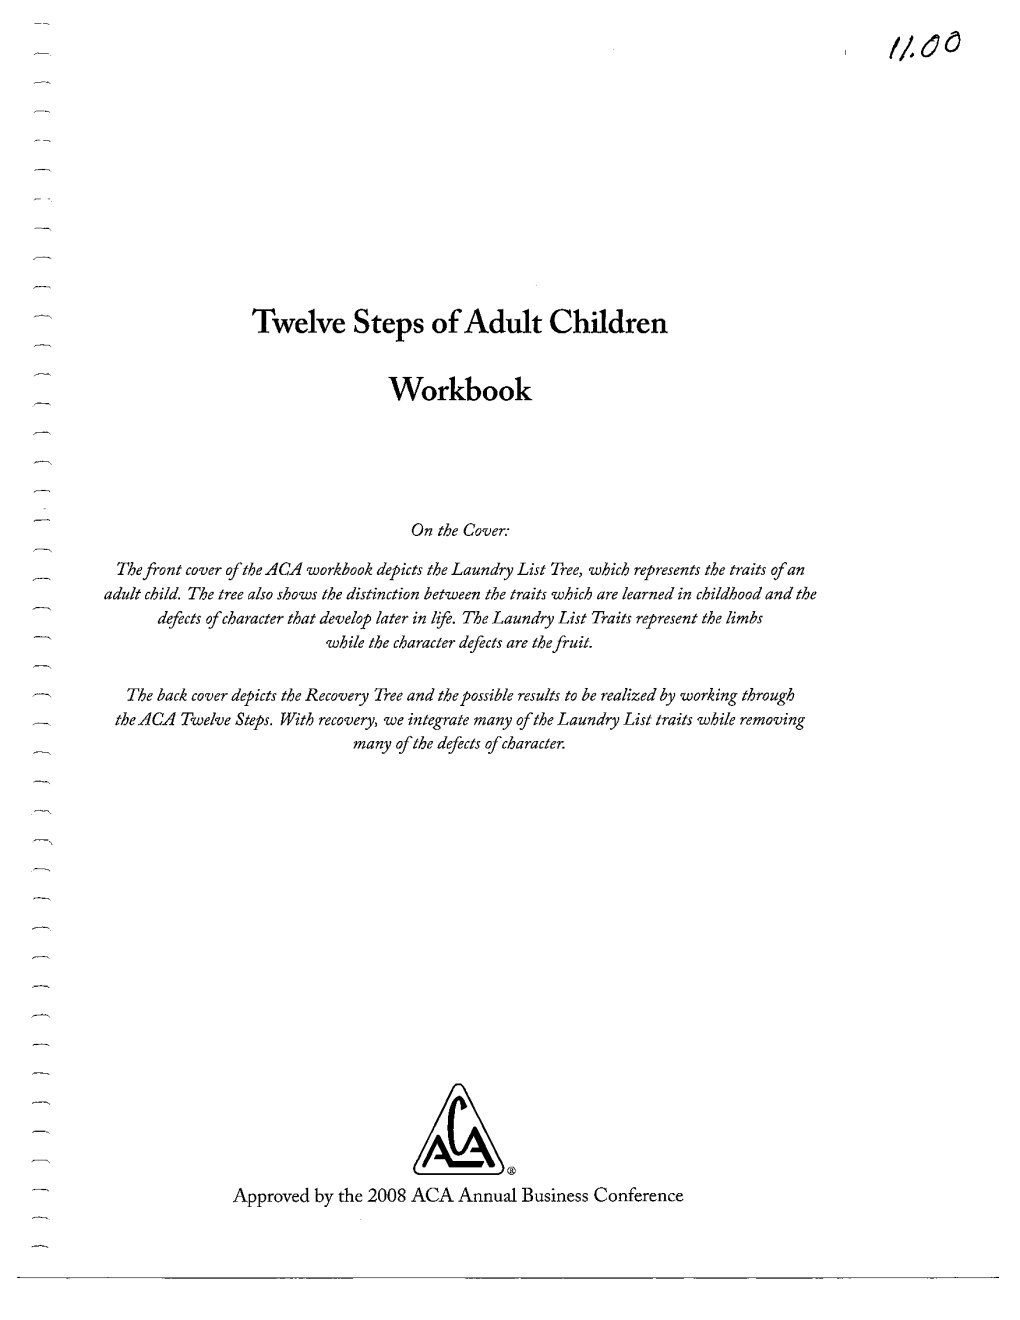 Twelve Steps of Adult Children Workbook